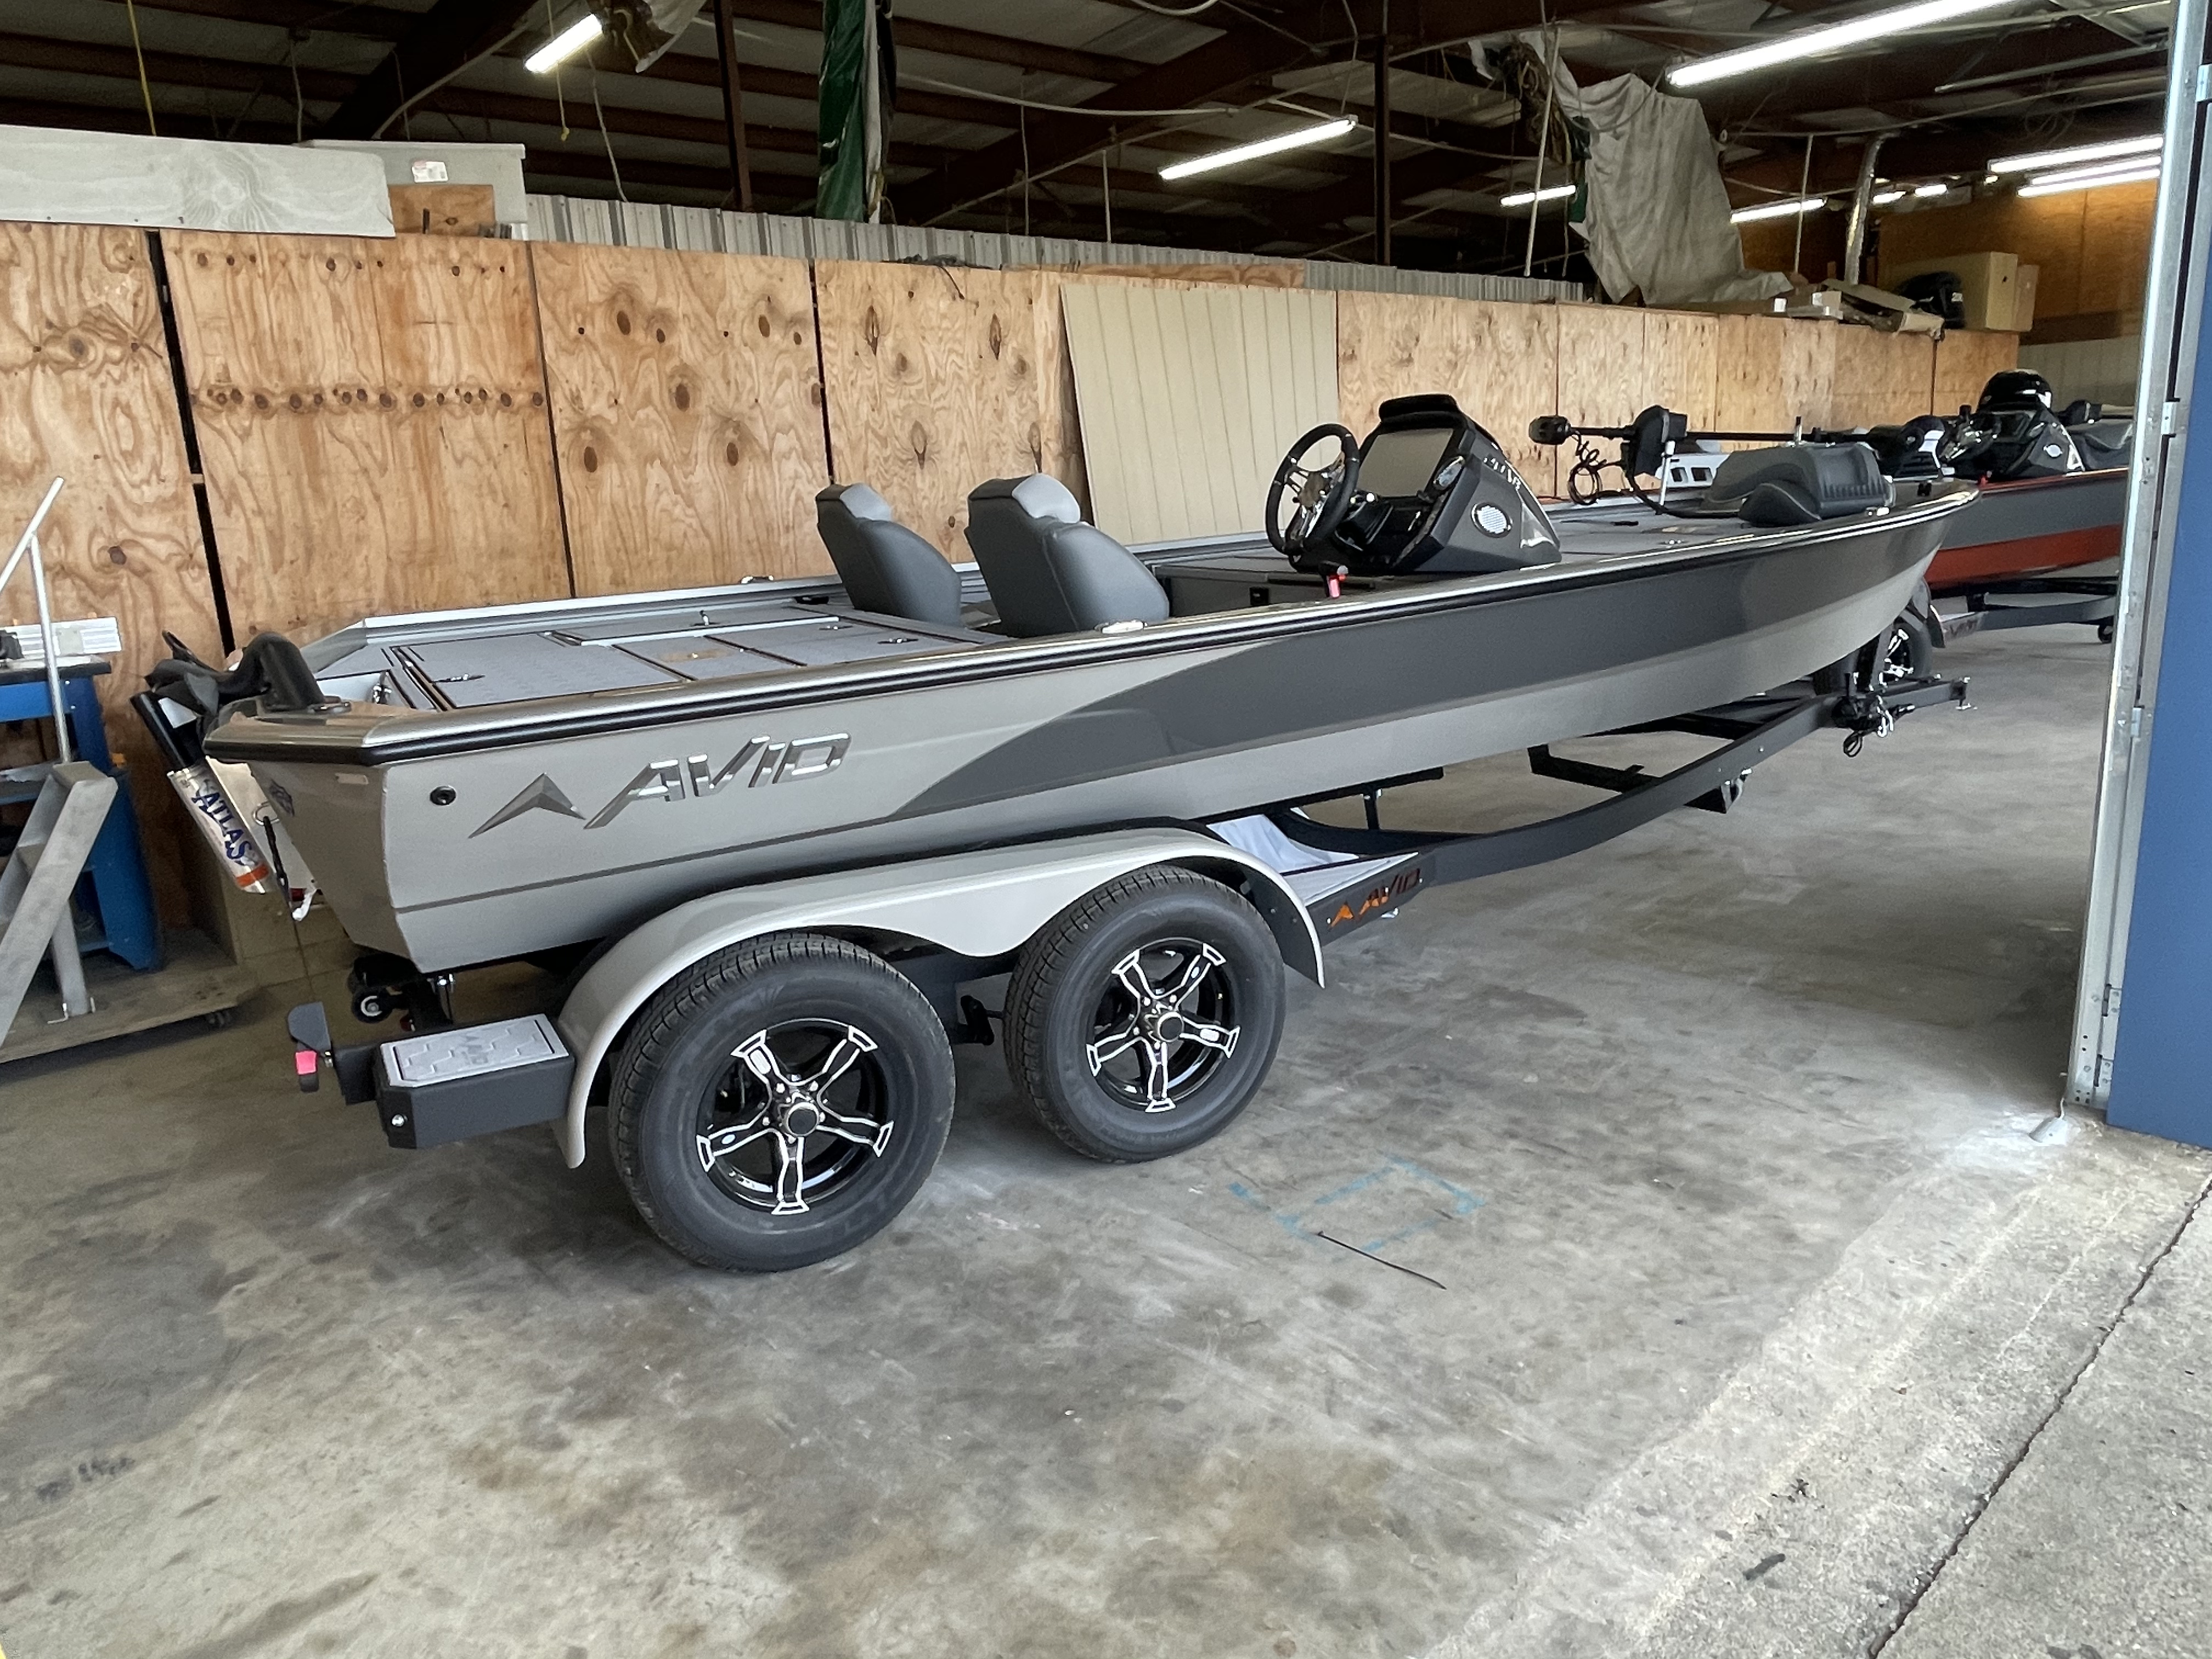 New Avid 20XB For Sale 20' Aluminum Bass Boat Yamaha 200 hp SHO Outboard Motor